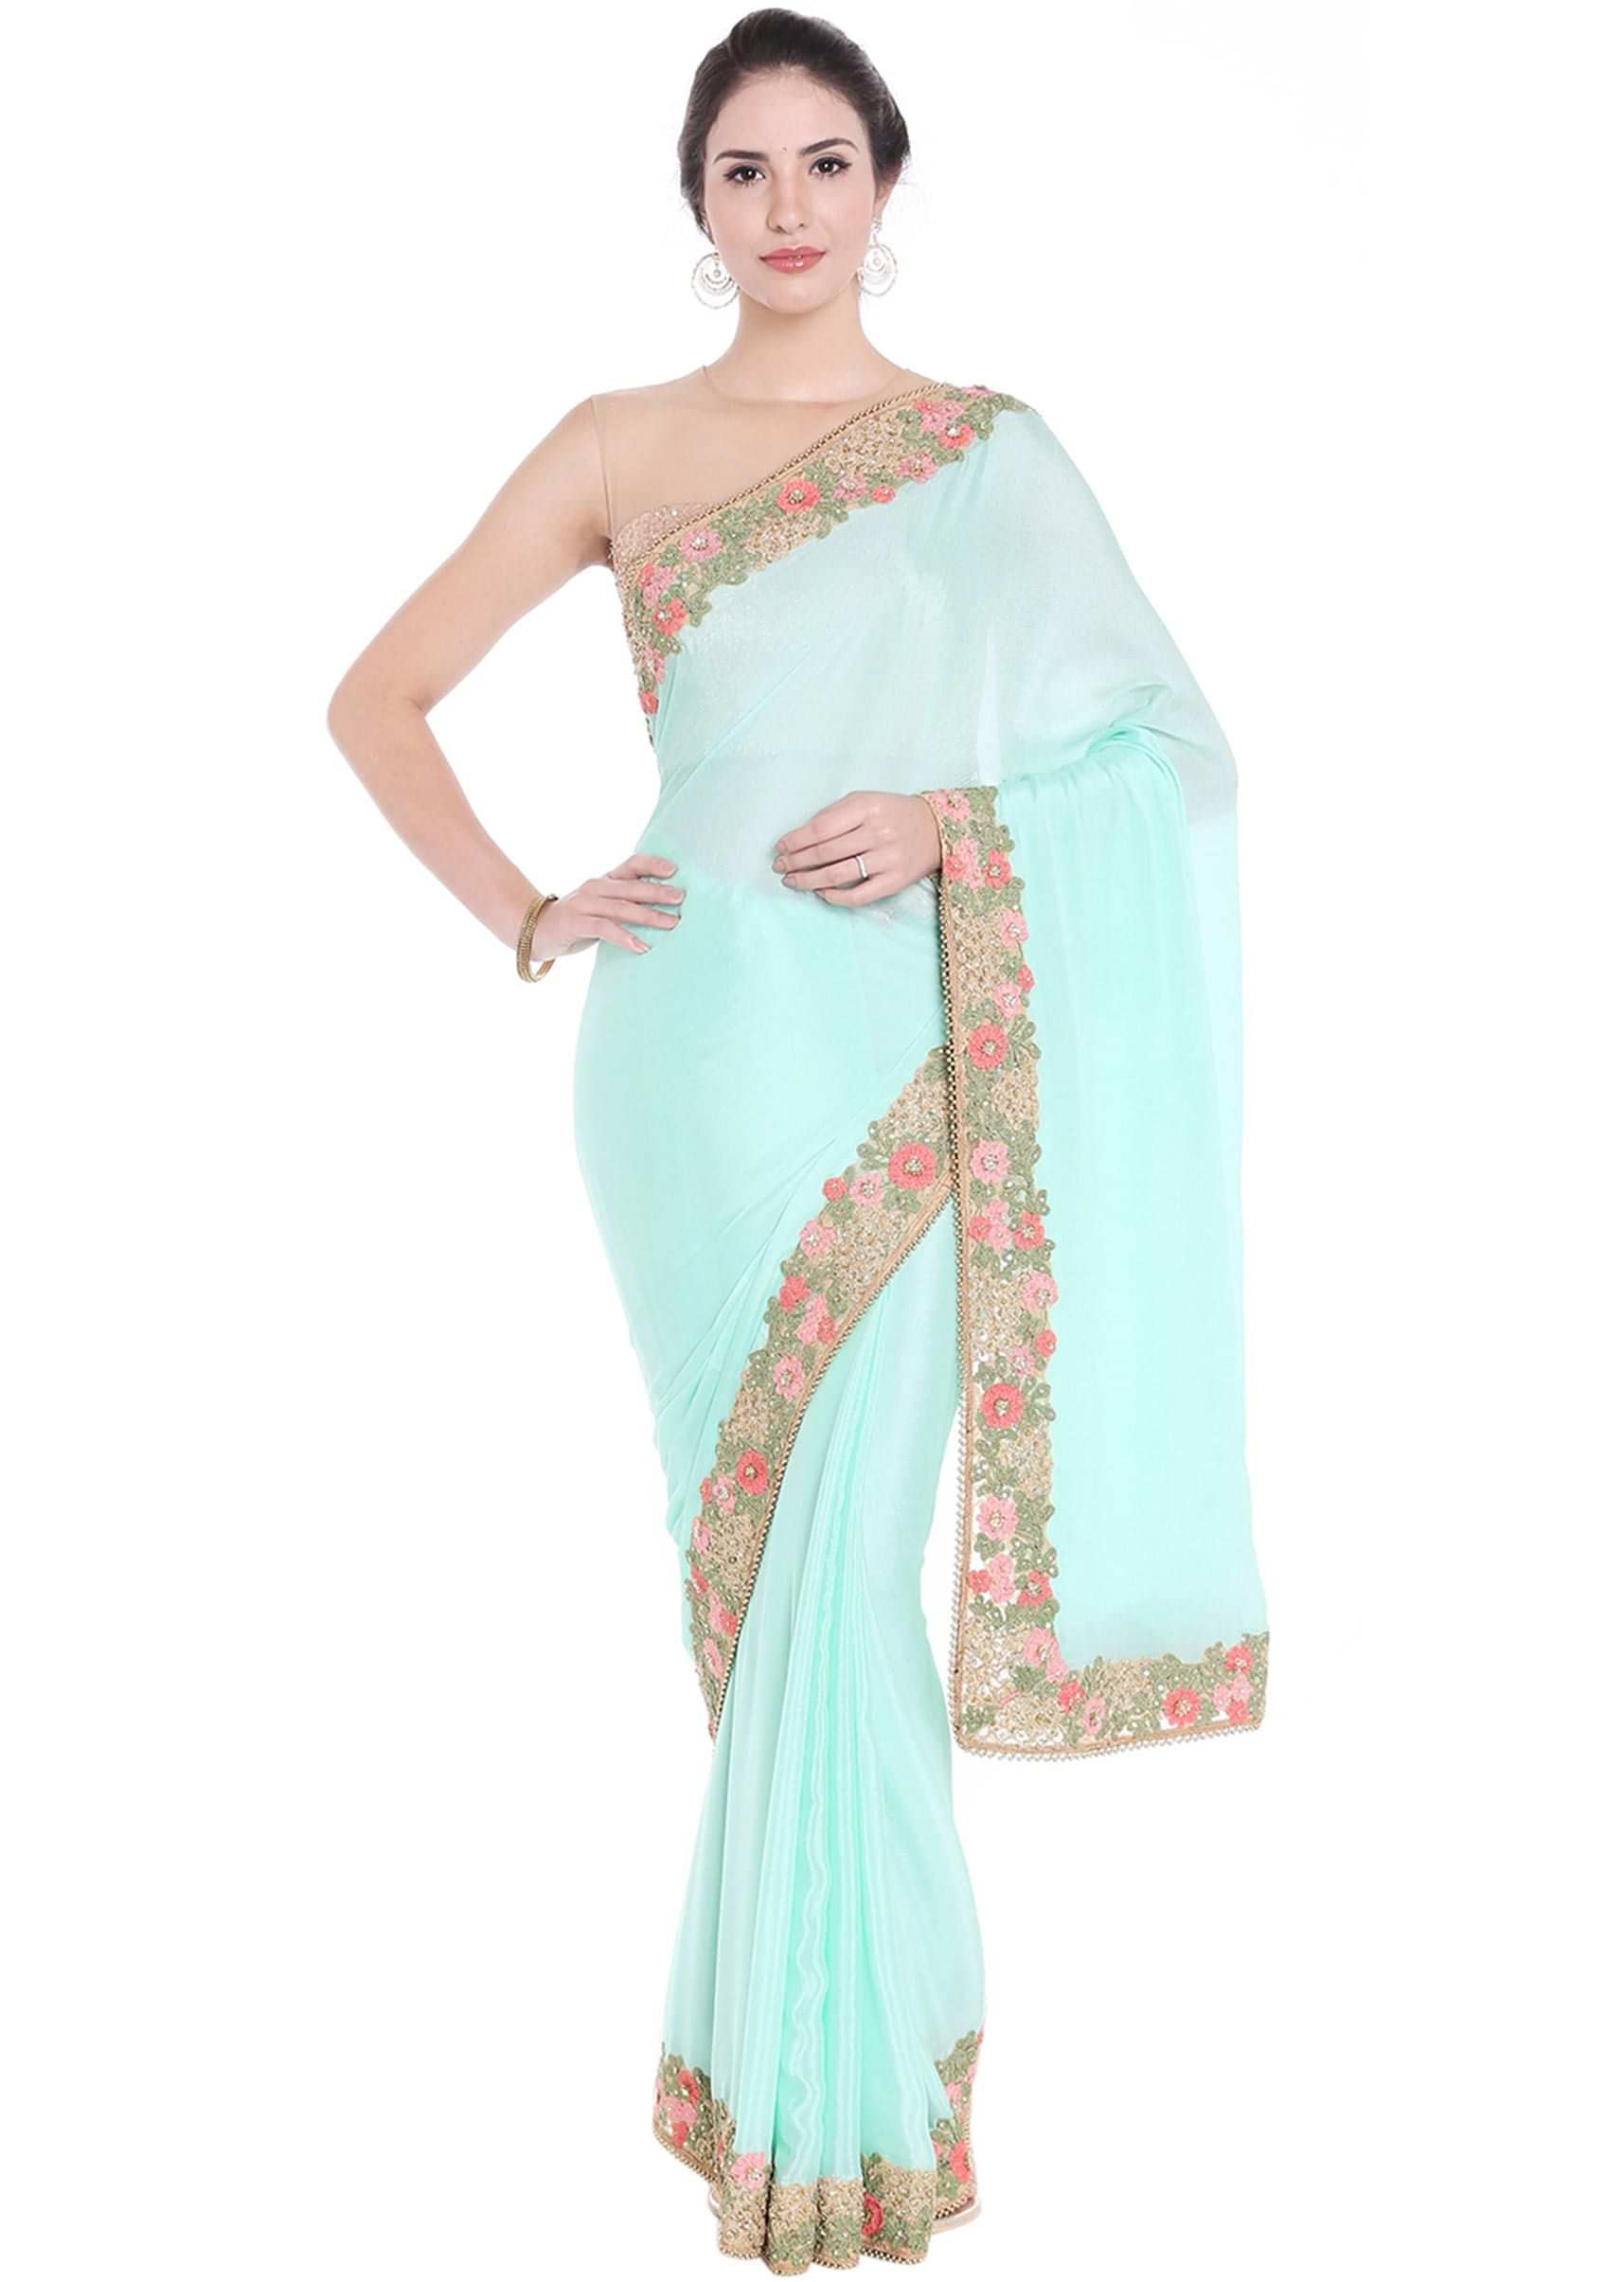 Sea Blue Saree In Georgette With Floral Border Online - Kalki Fashion